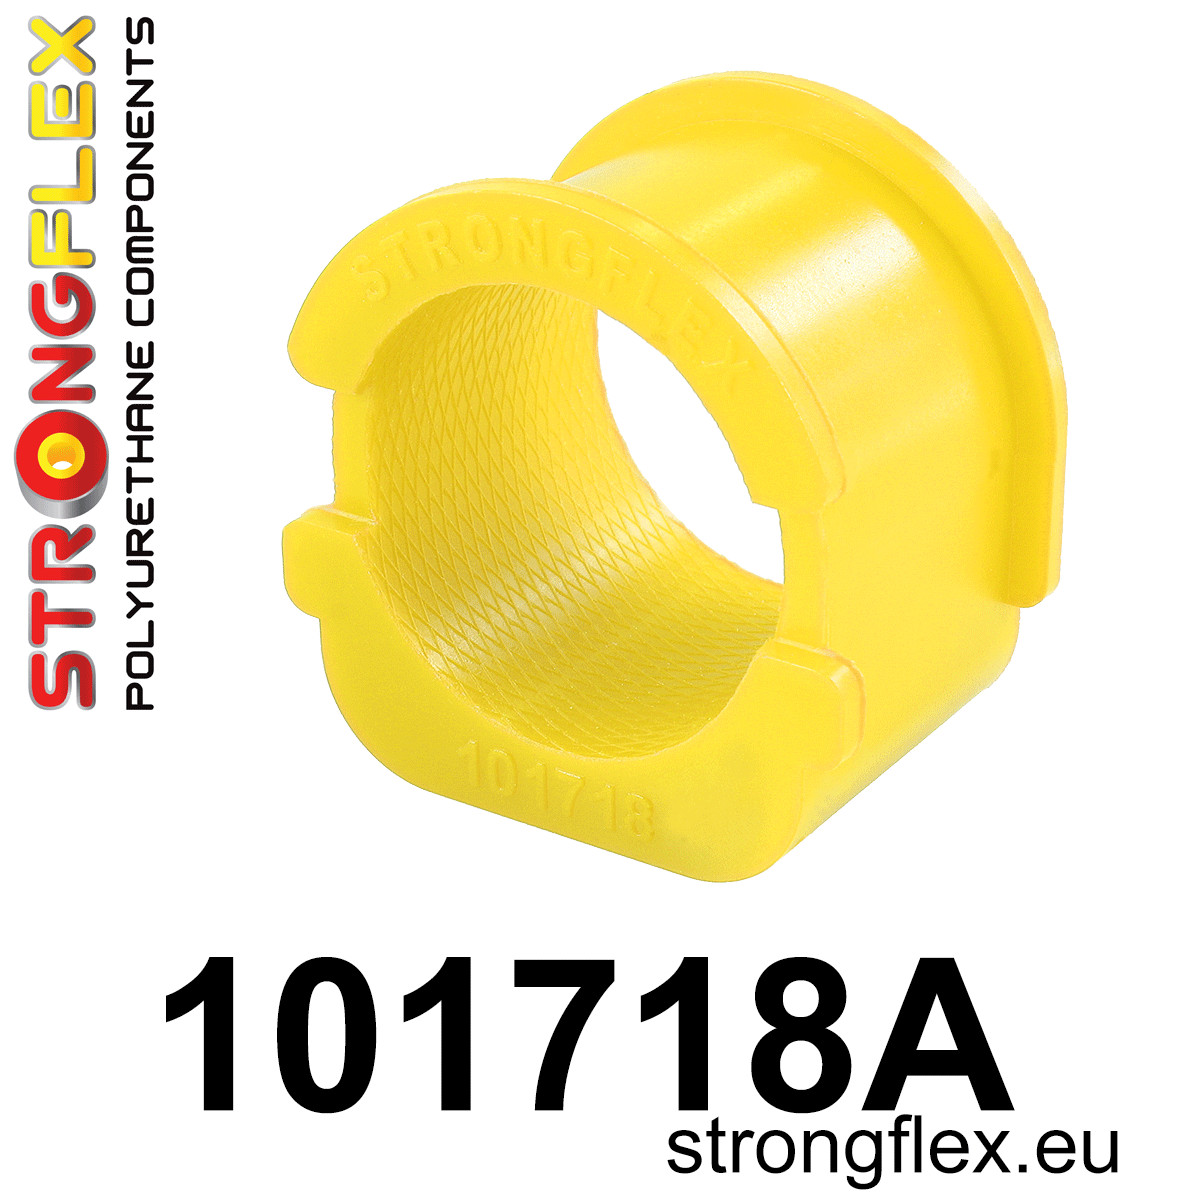 101718A: Steering clamb bush SPORT